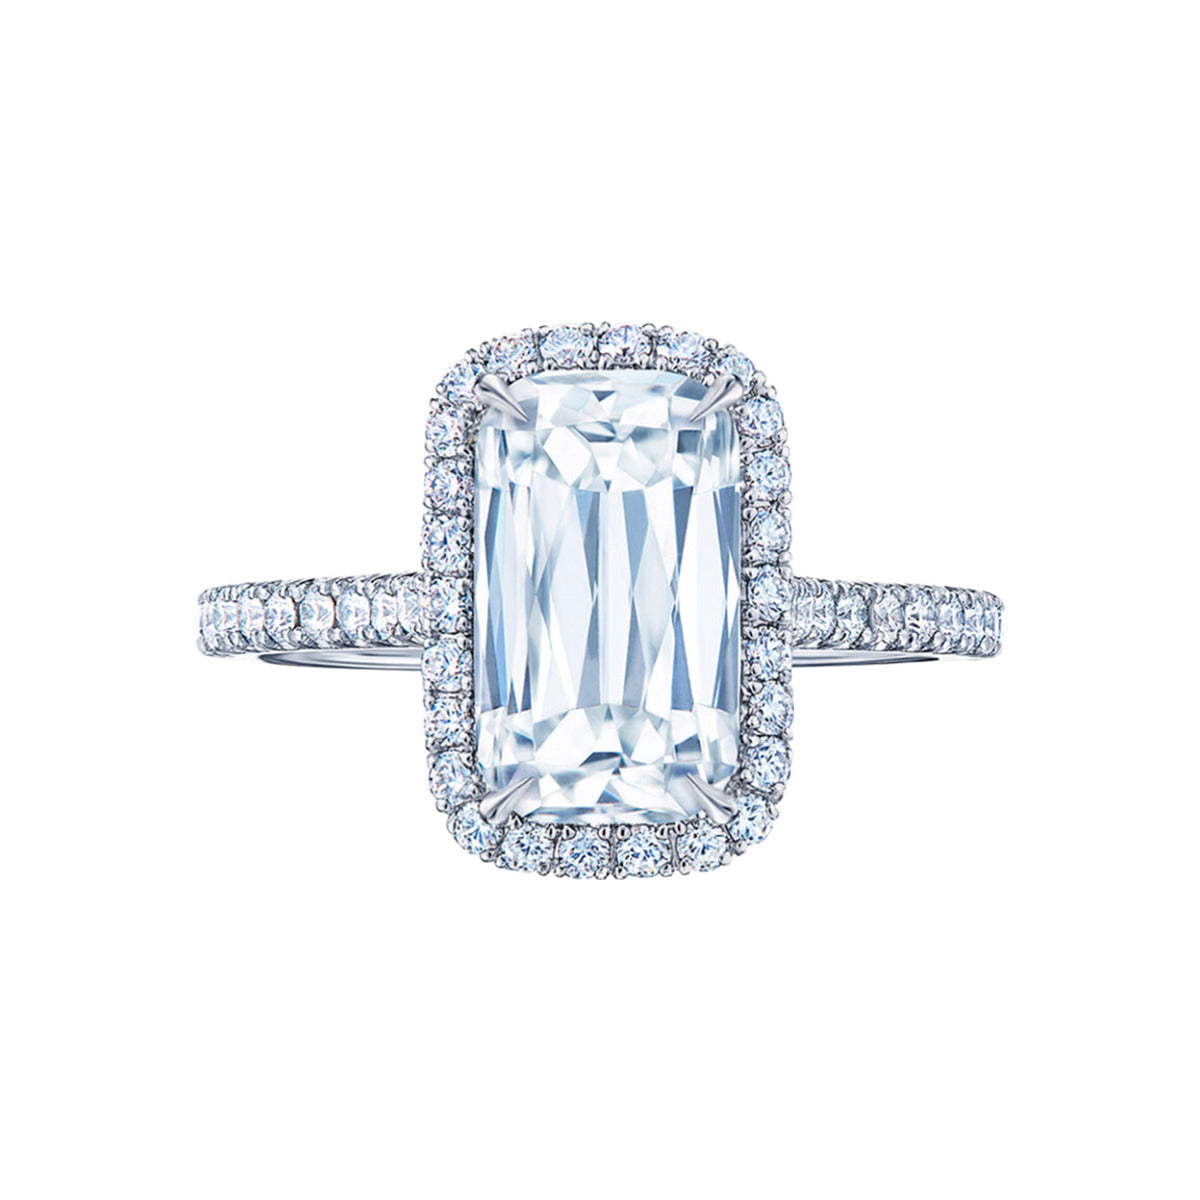 ASHOKA® Diamond Trilogy Microset Ring by William Goldberg | Ashoka diamond,  Fine diamond jewelry, Wedding rings unique